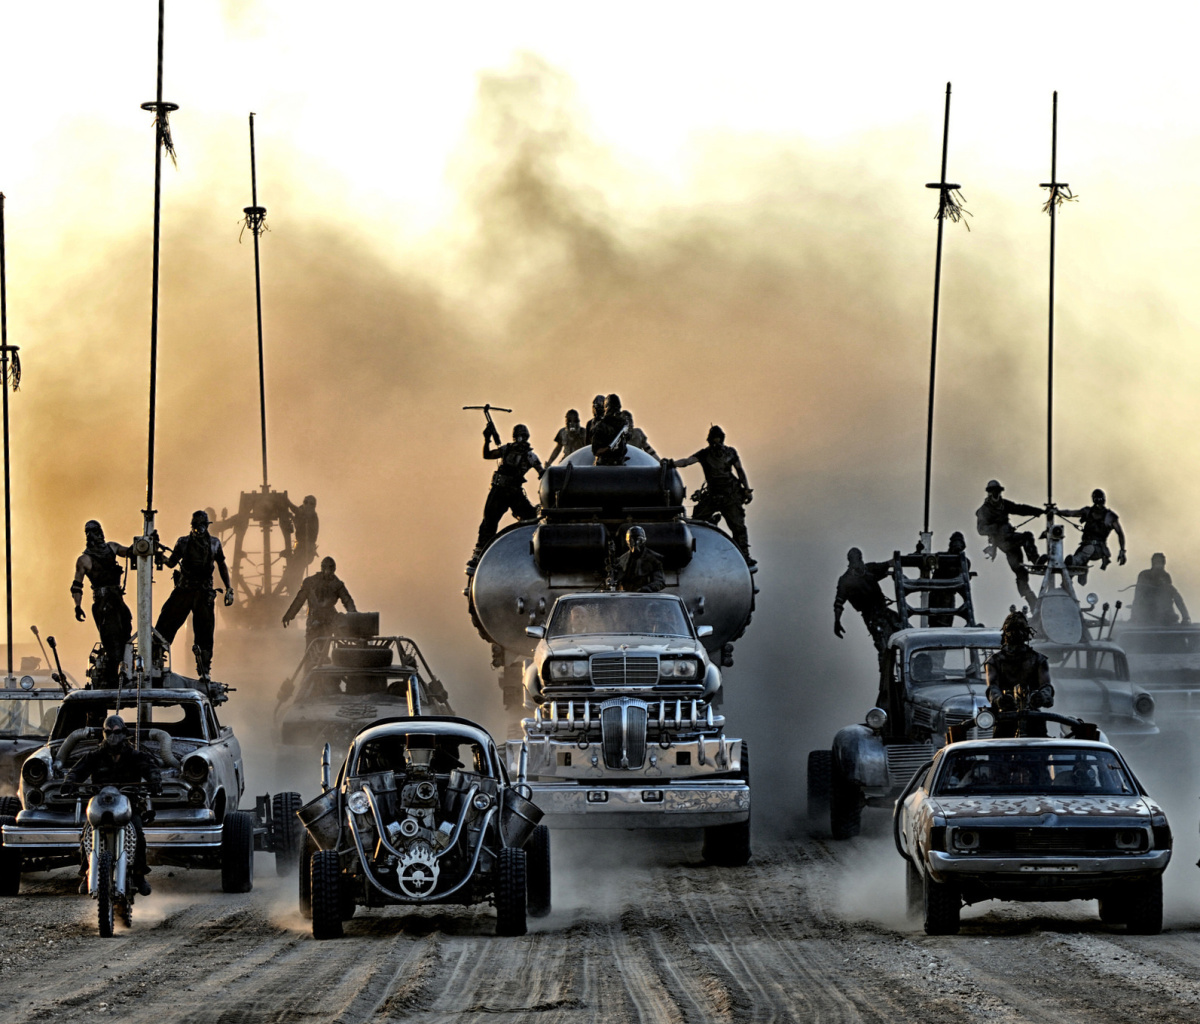 Das Mad Max Fury Road Wallpaper 1200x1024